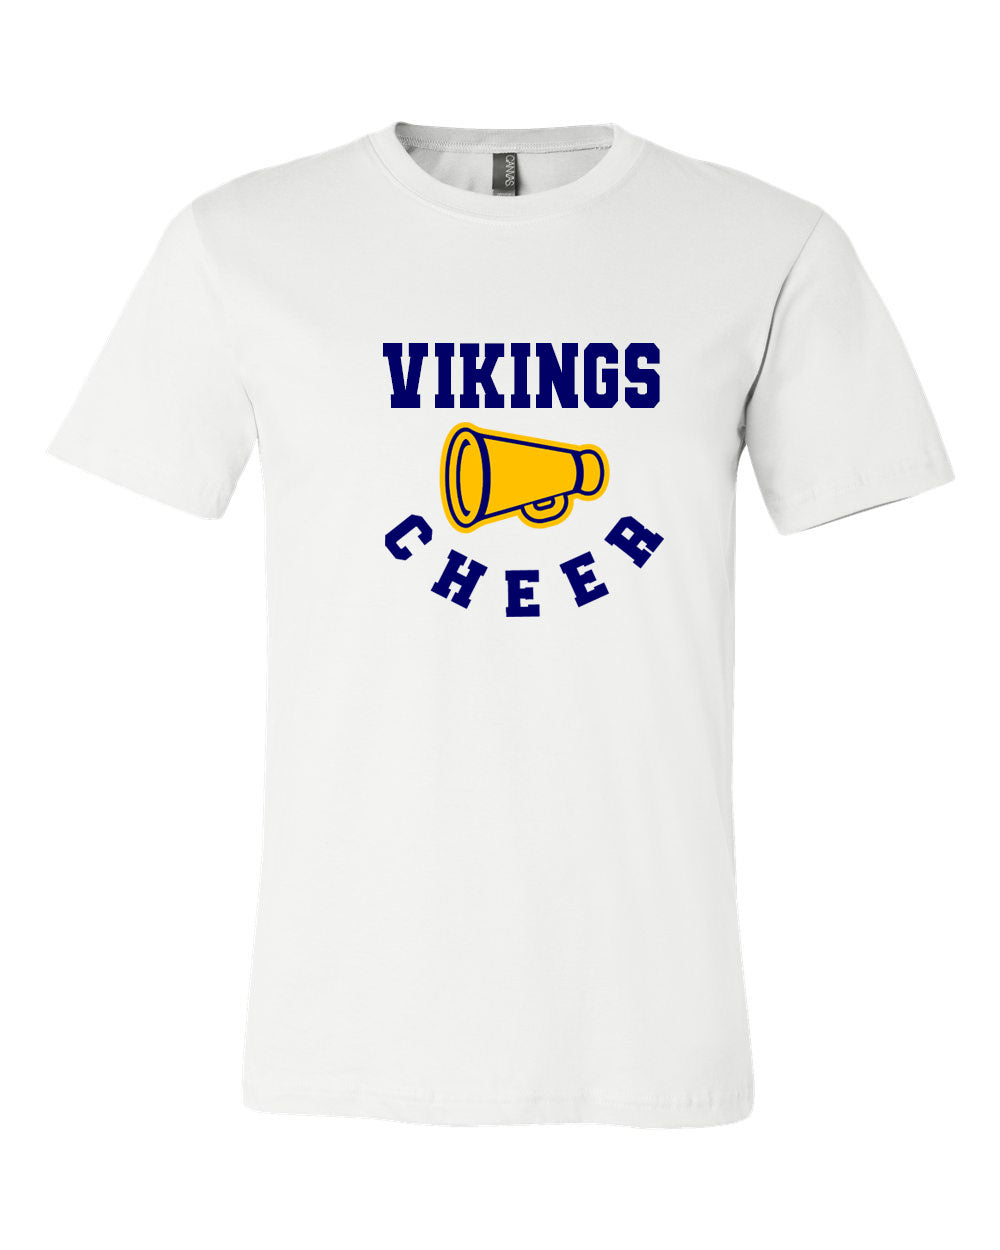 Vikings Cheer design 13 t-Shirt